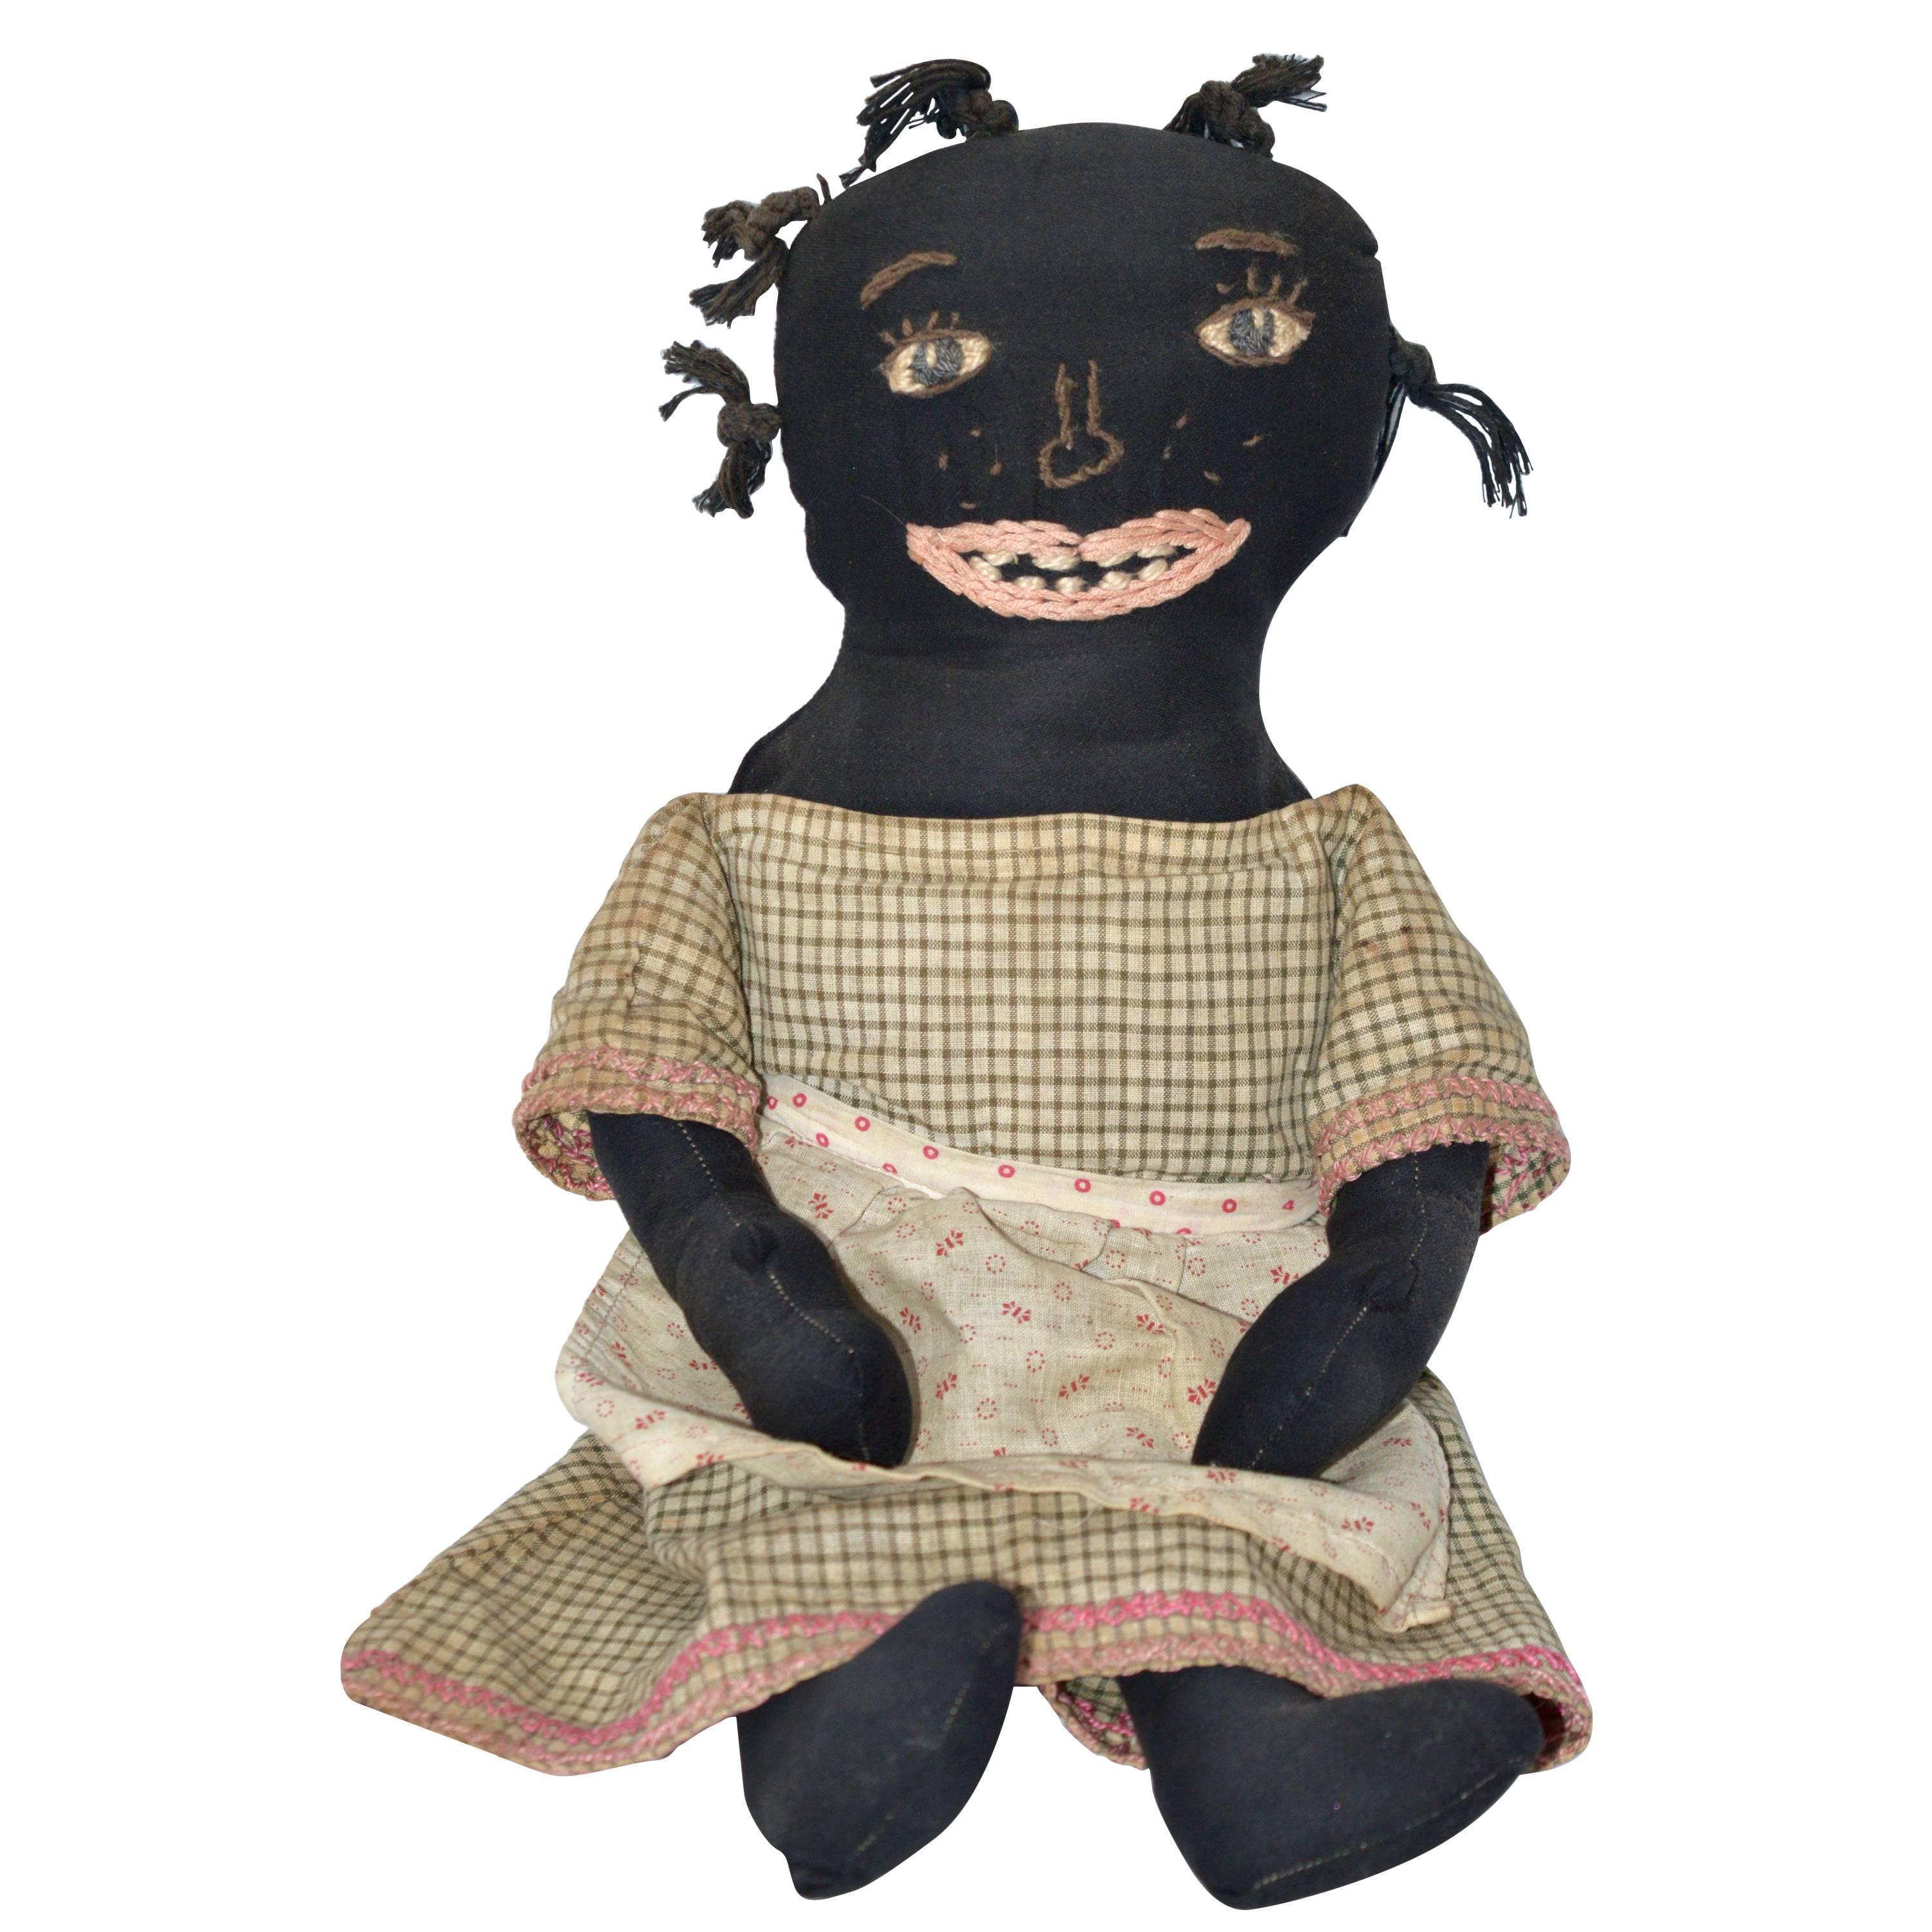 Friendly American Southern Black Rag Doll, circa 1920